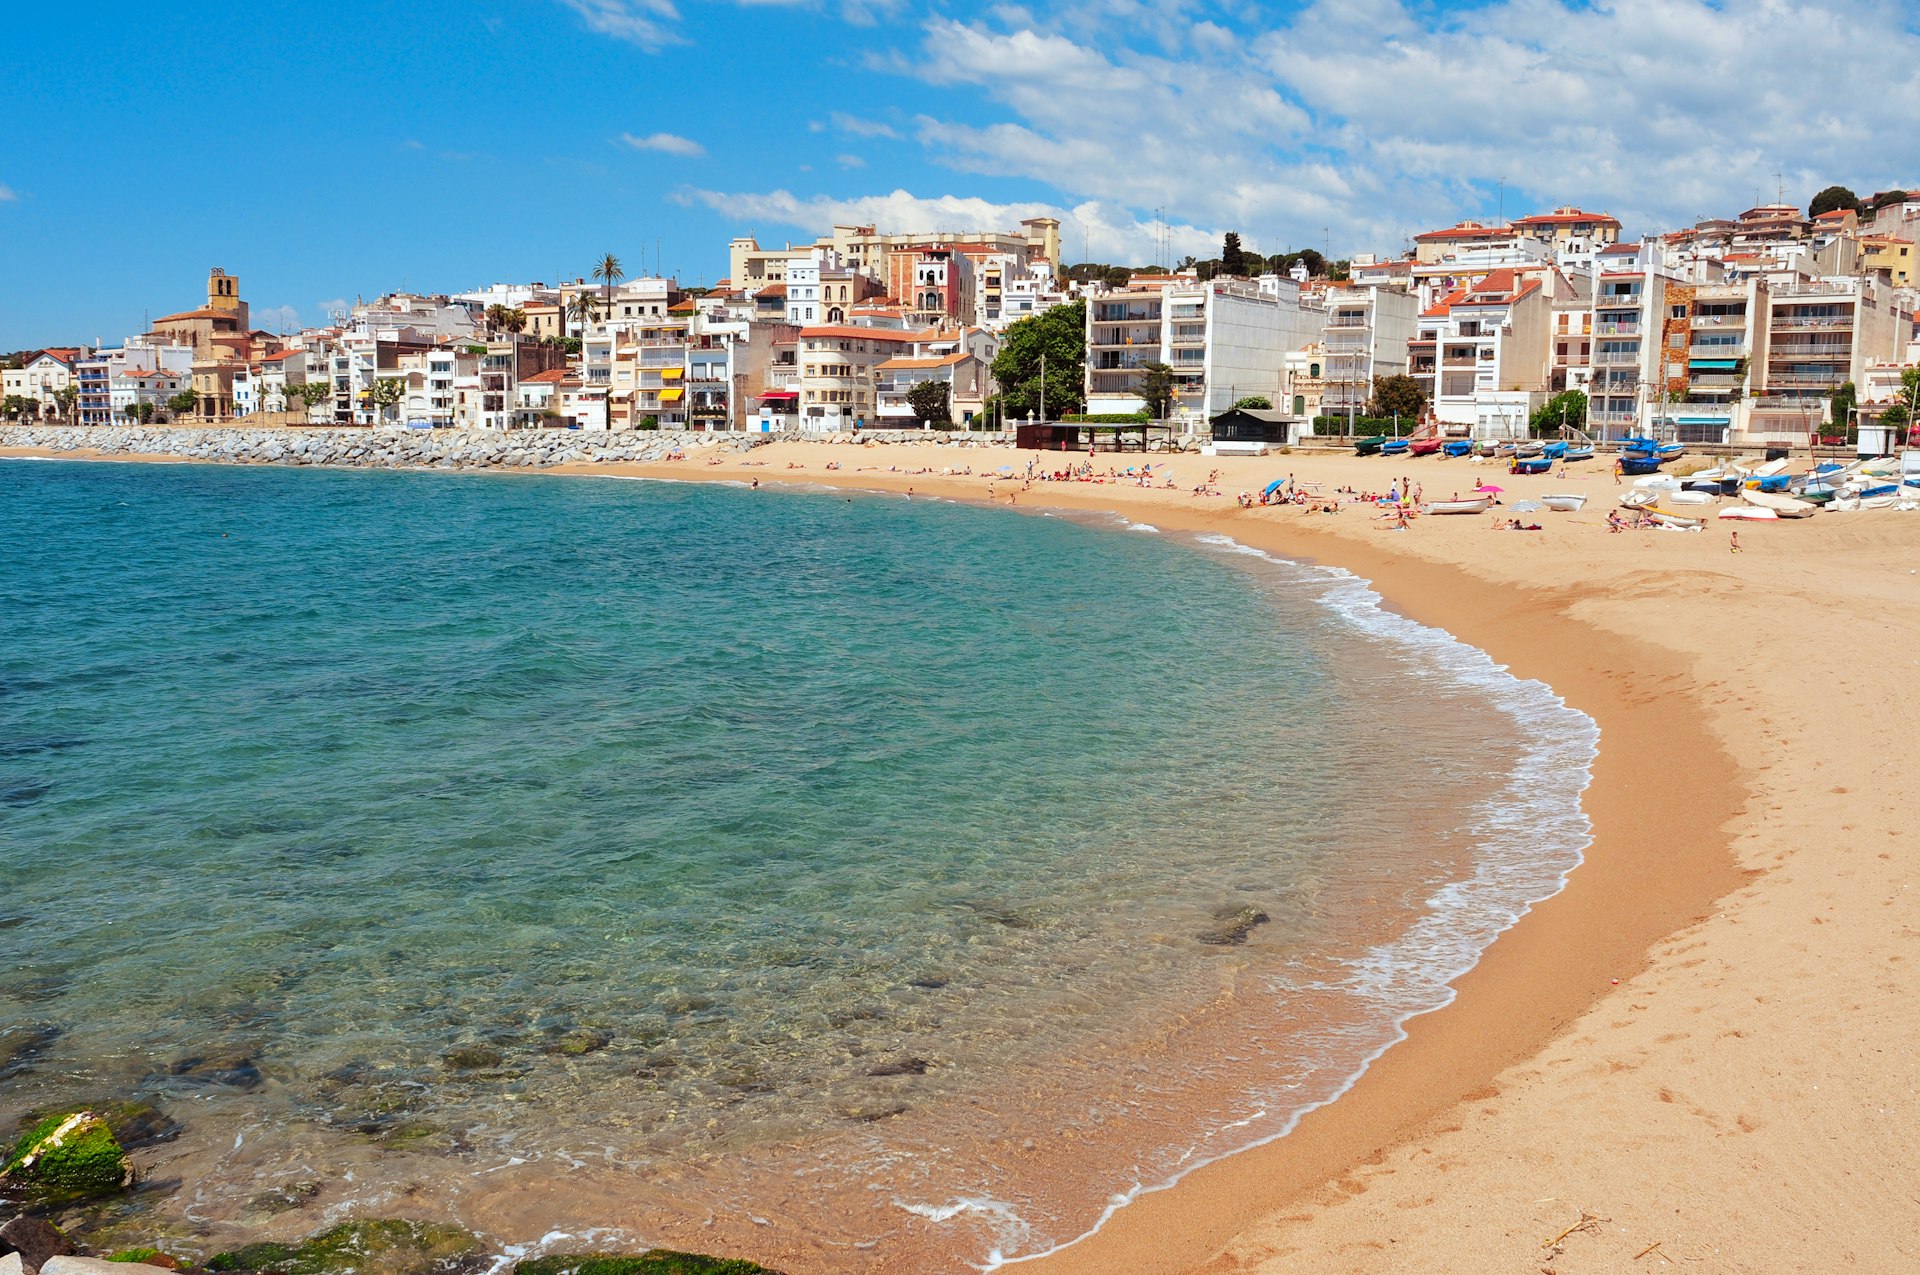  view of Platja de les Barques beach in Sant Pol de Mar, Spain